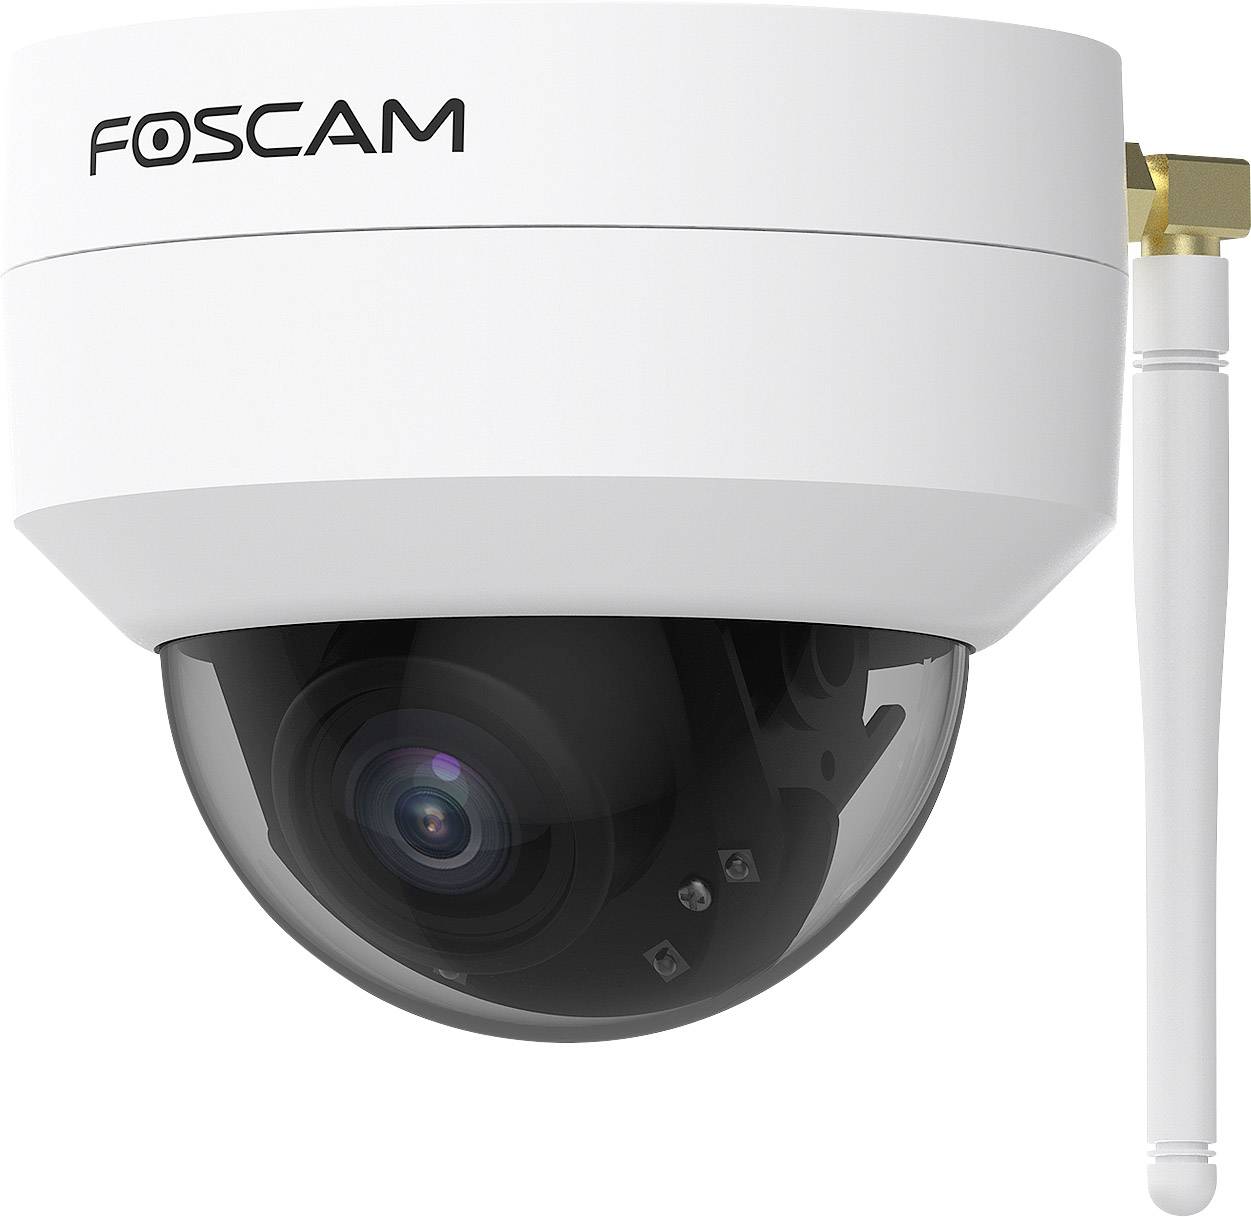 FOSCAM D4Z fscd4z WLAN IP Überwachungskamera 2304 x 1536 Pixel